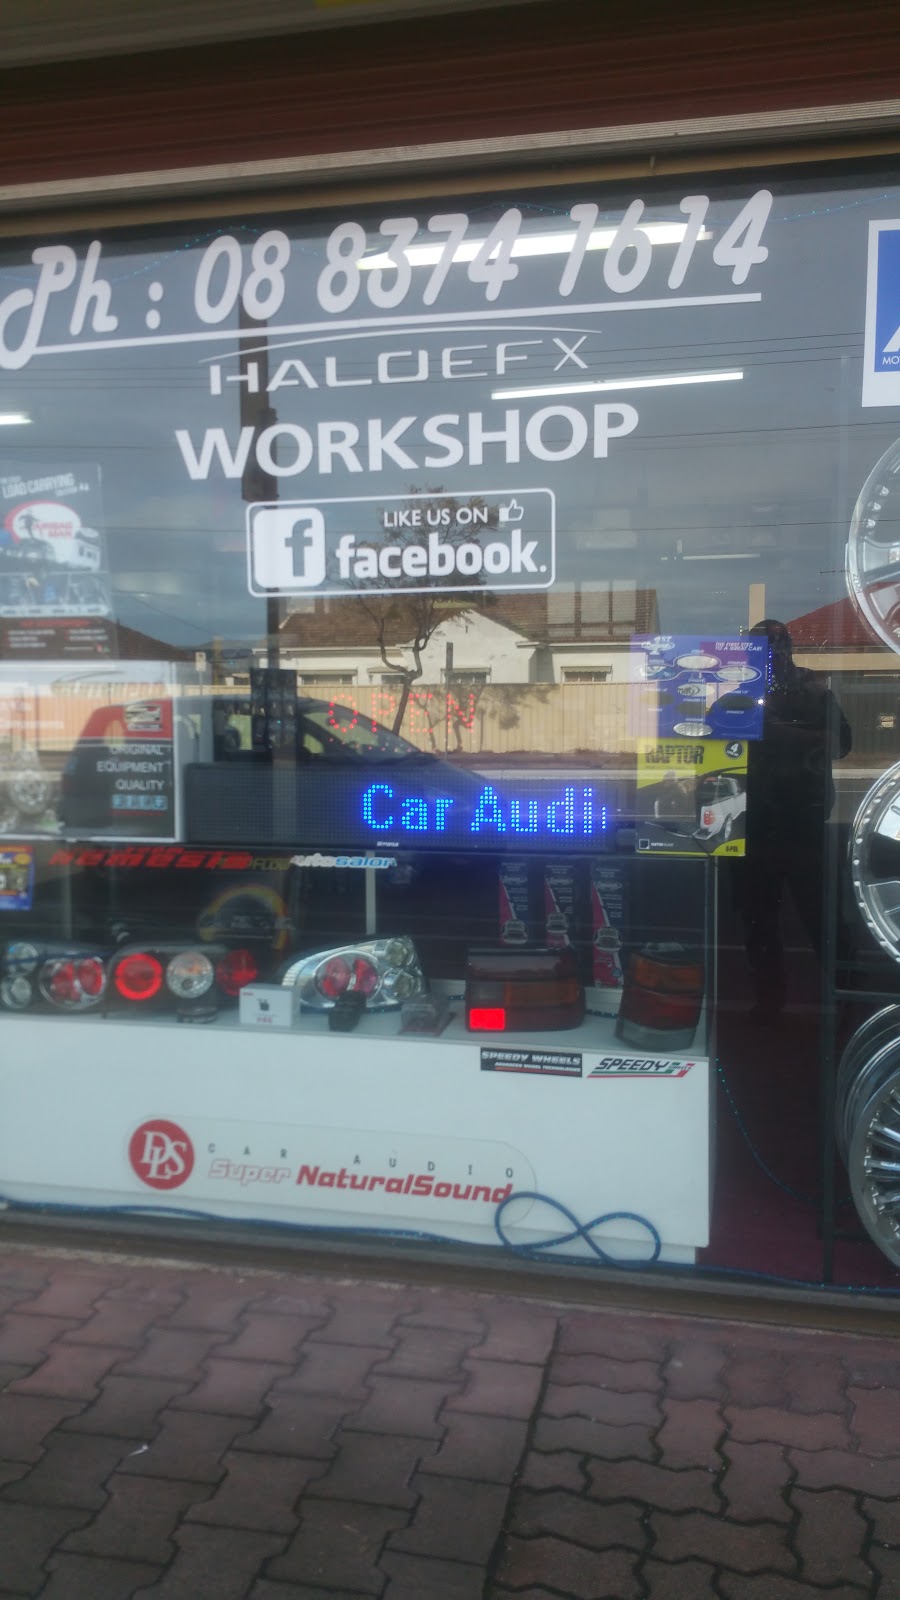 AutoStyle Warehouse | car repair | 92 Daws Rd, Edwardstown SA 5039, Australia | 0883741614 OR +61 8 8374 1614